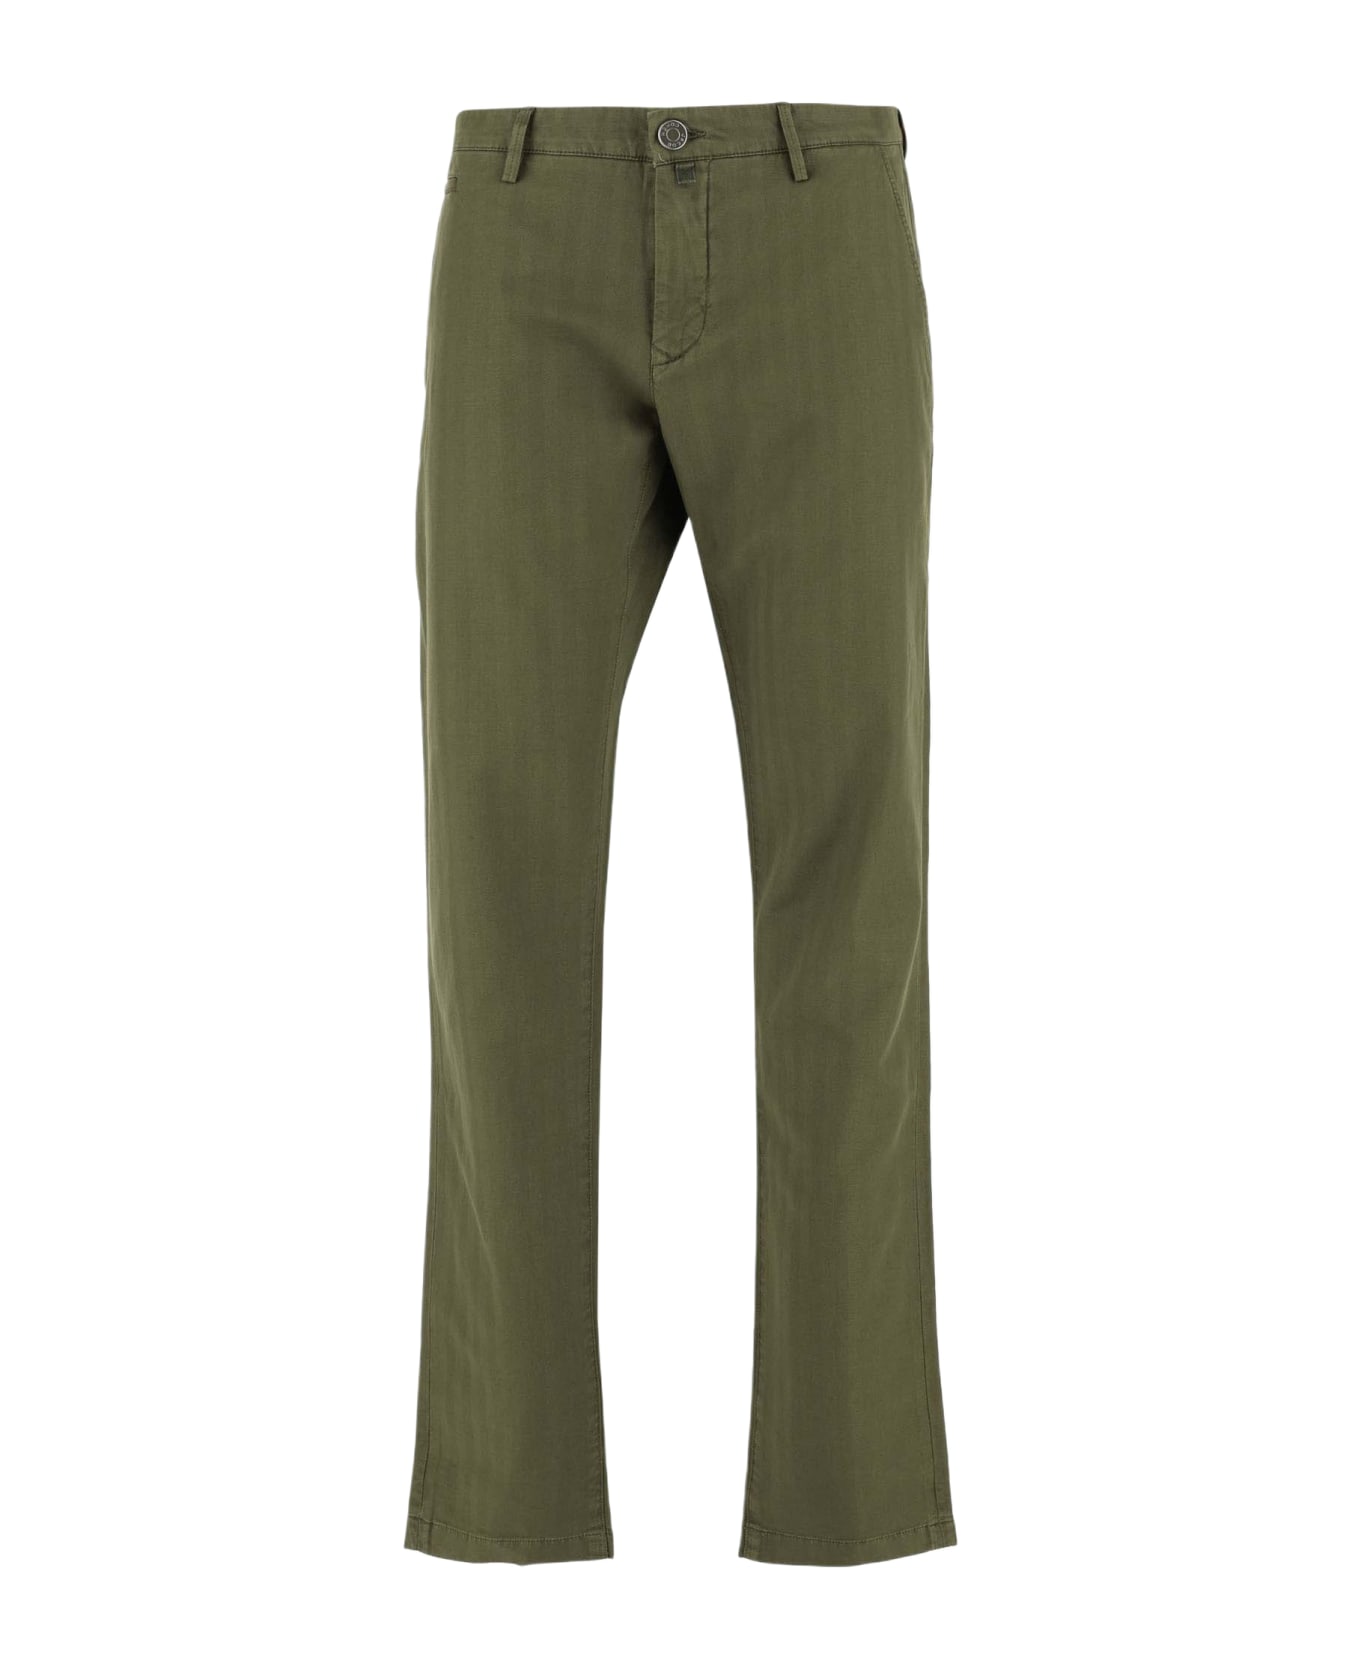 Jacob Cohen Cotton Blend Stretch Pants - Green